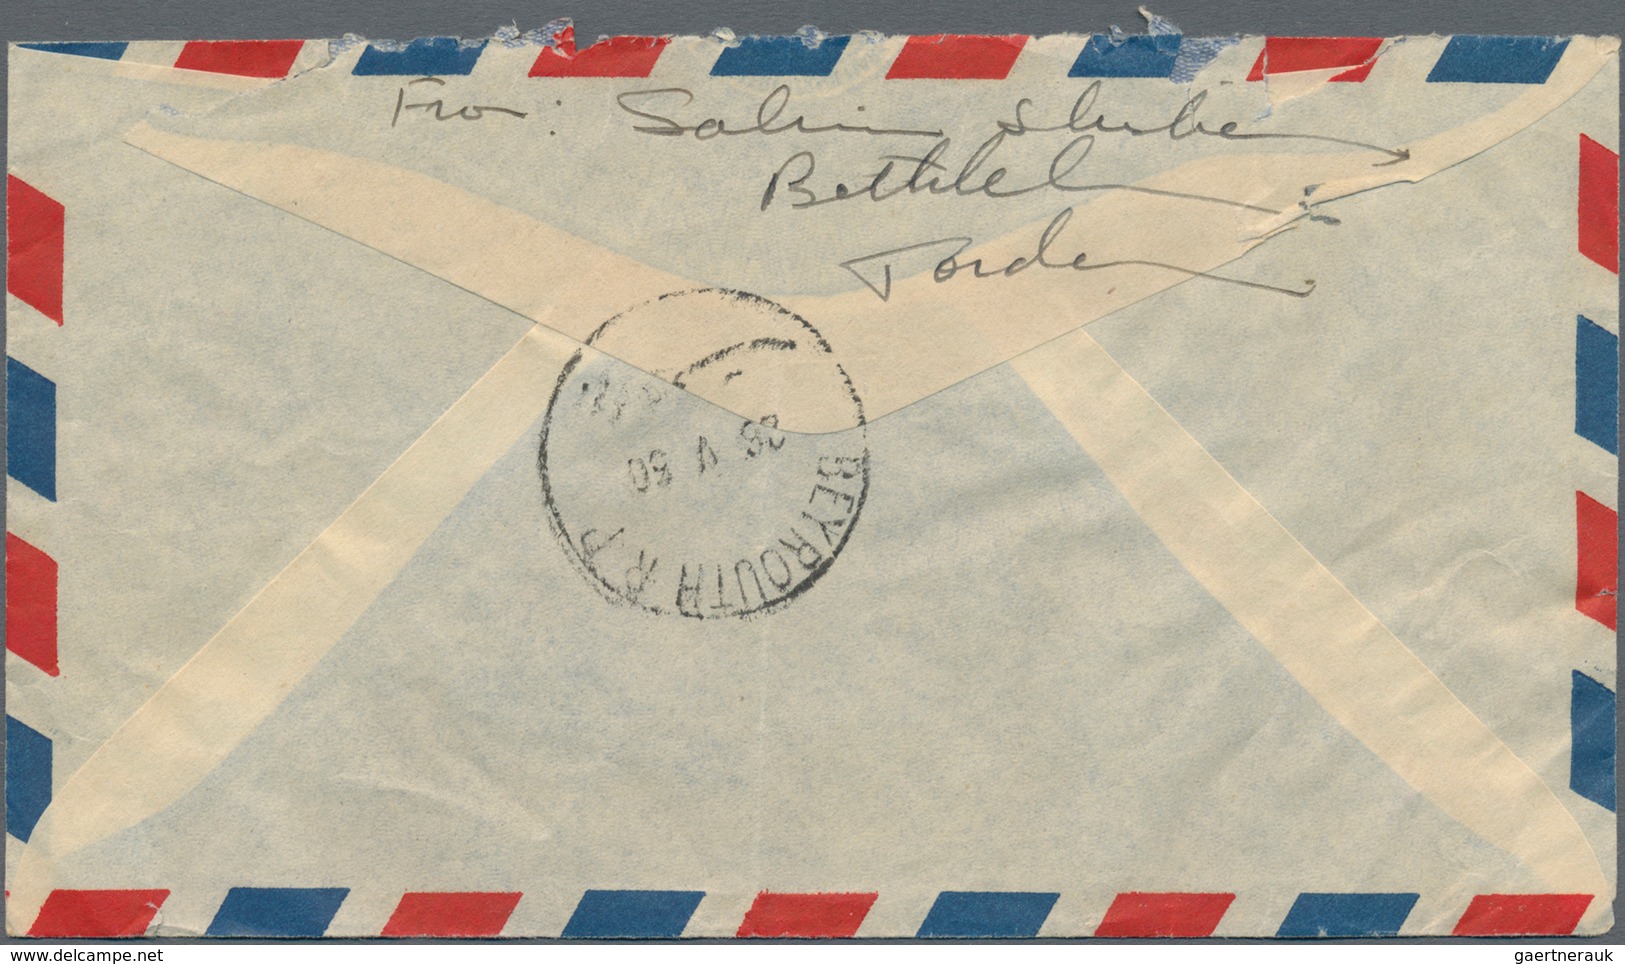 Jordanische Besetzung Palästina: 1950, correspondence of covers (10, 9 by airmail) from "BETHLEHEM"